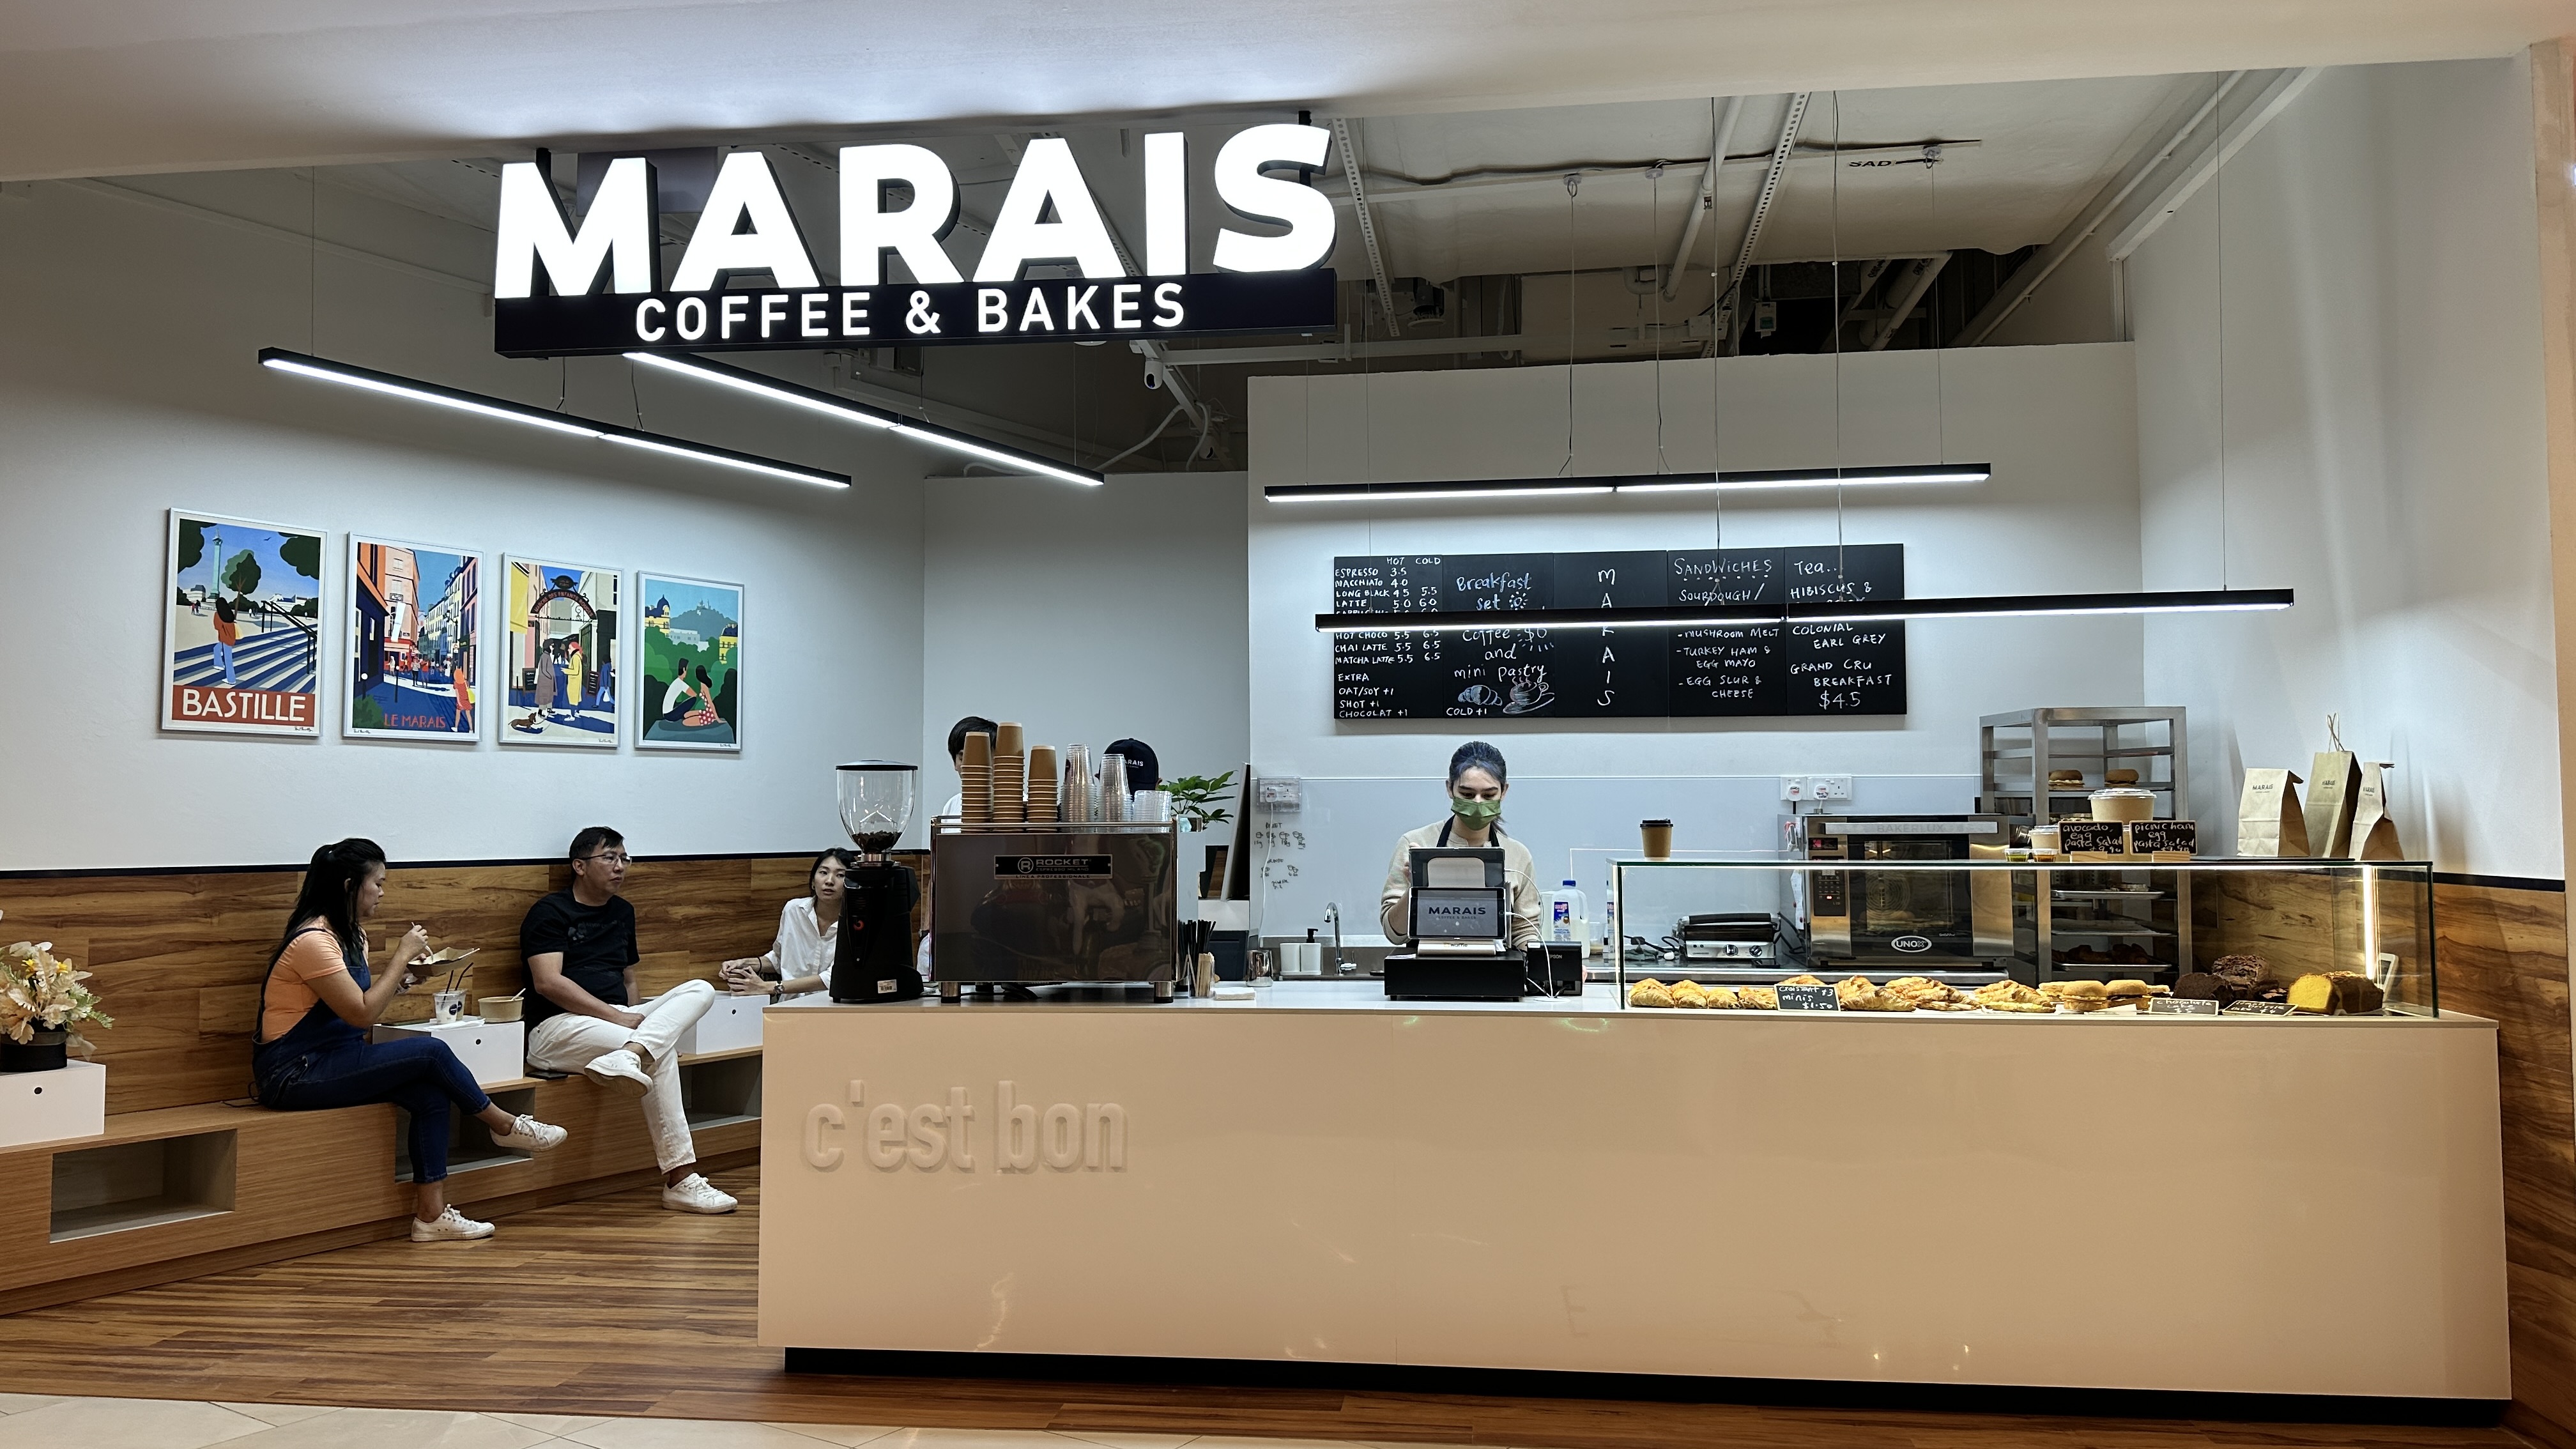 MARAIS COFFEE & BAKES